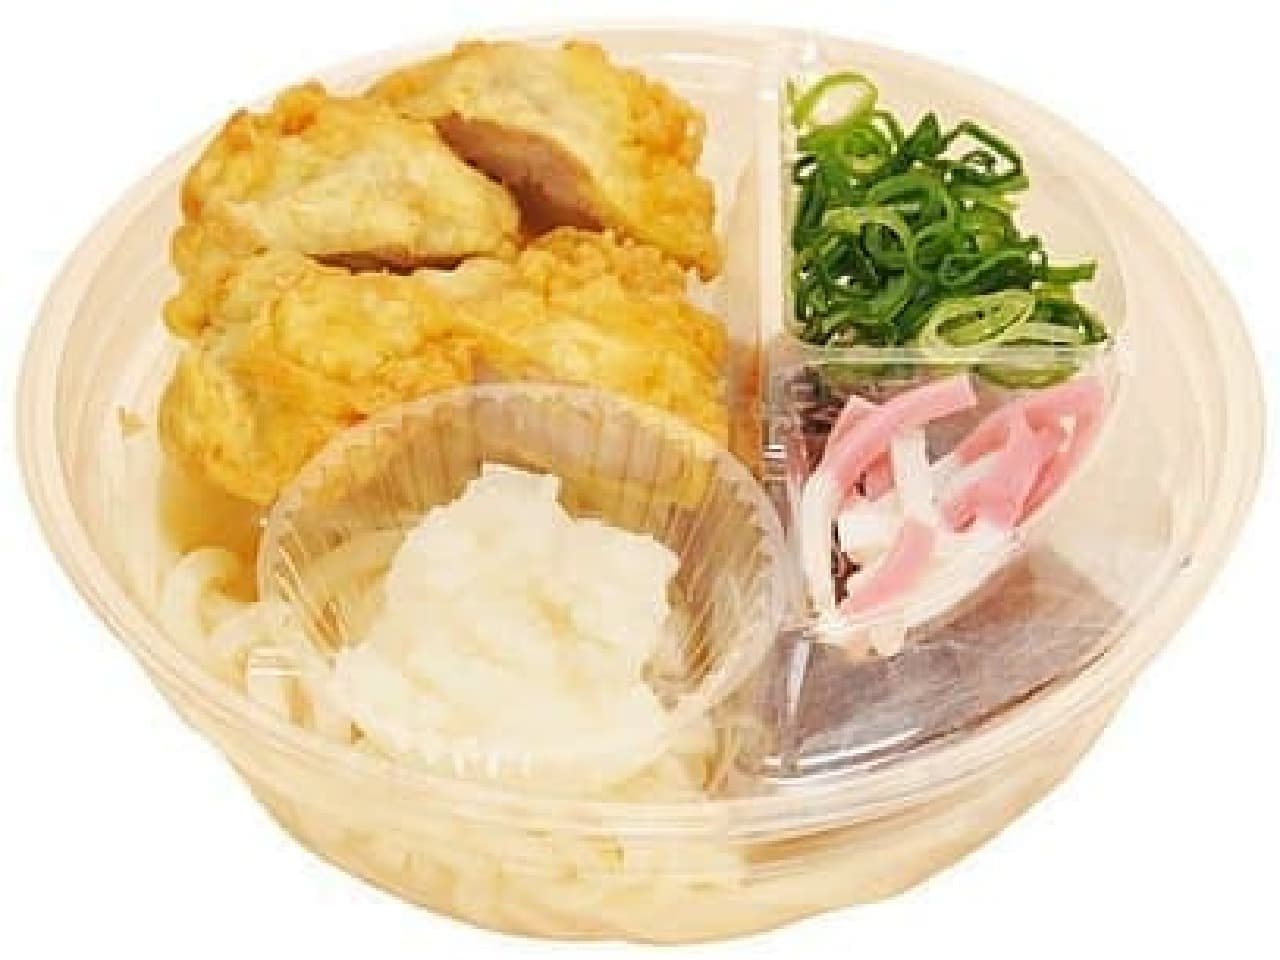 FamilyMart "Cold chicken tempura udon with grated radish